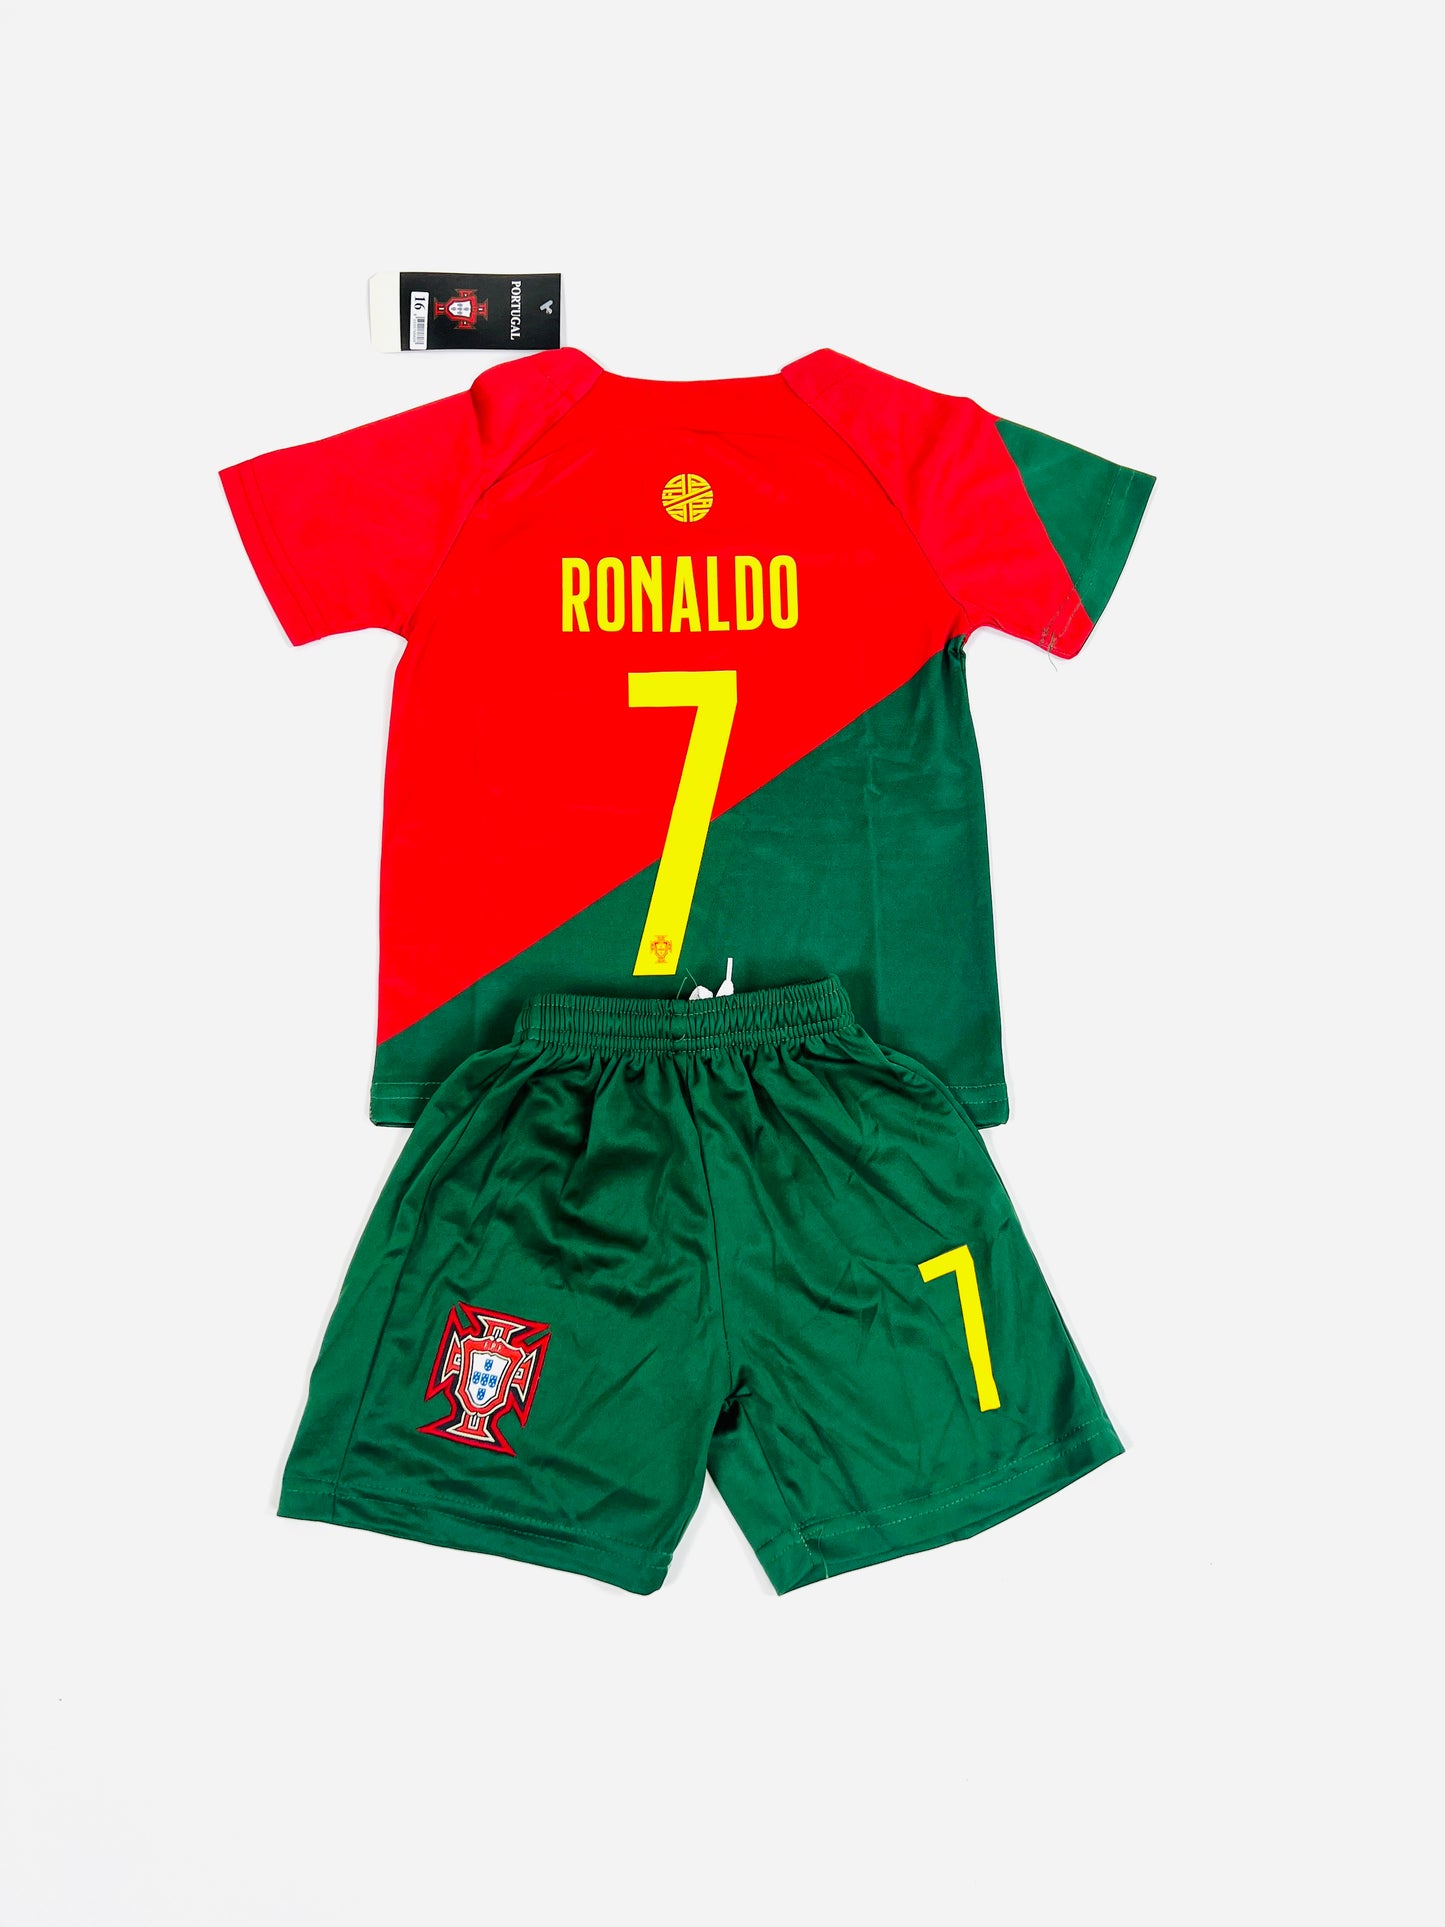 Ronaldo #7 Portugal Home Youth soccer set